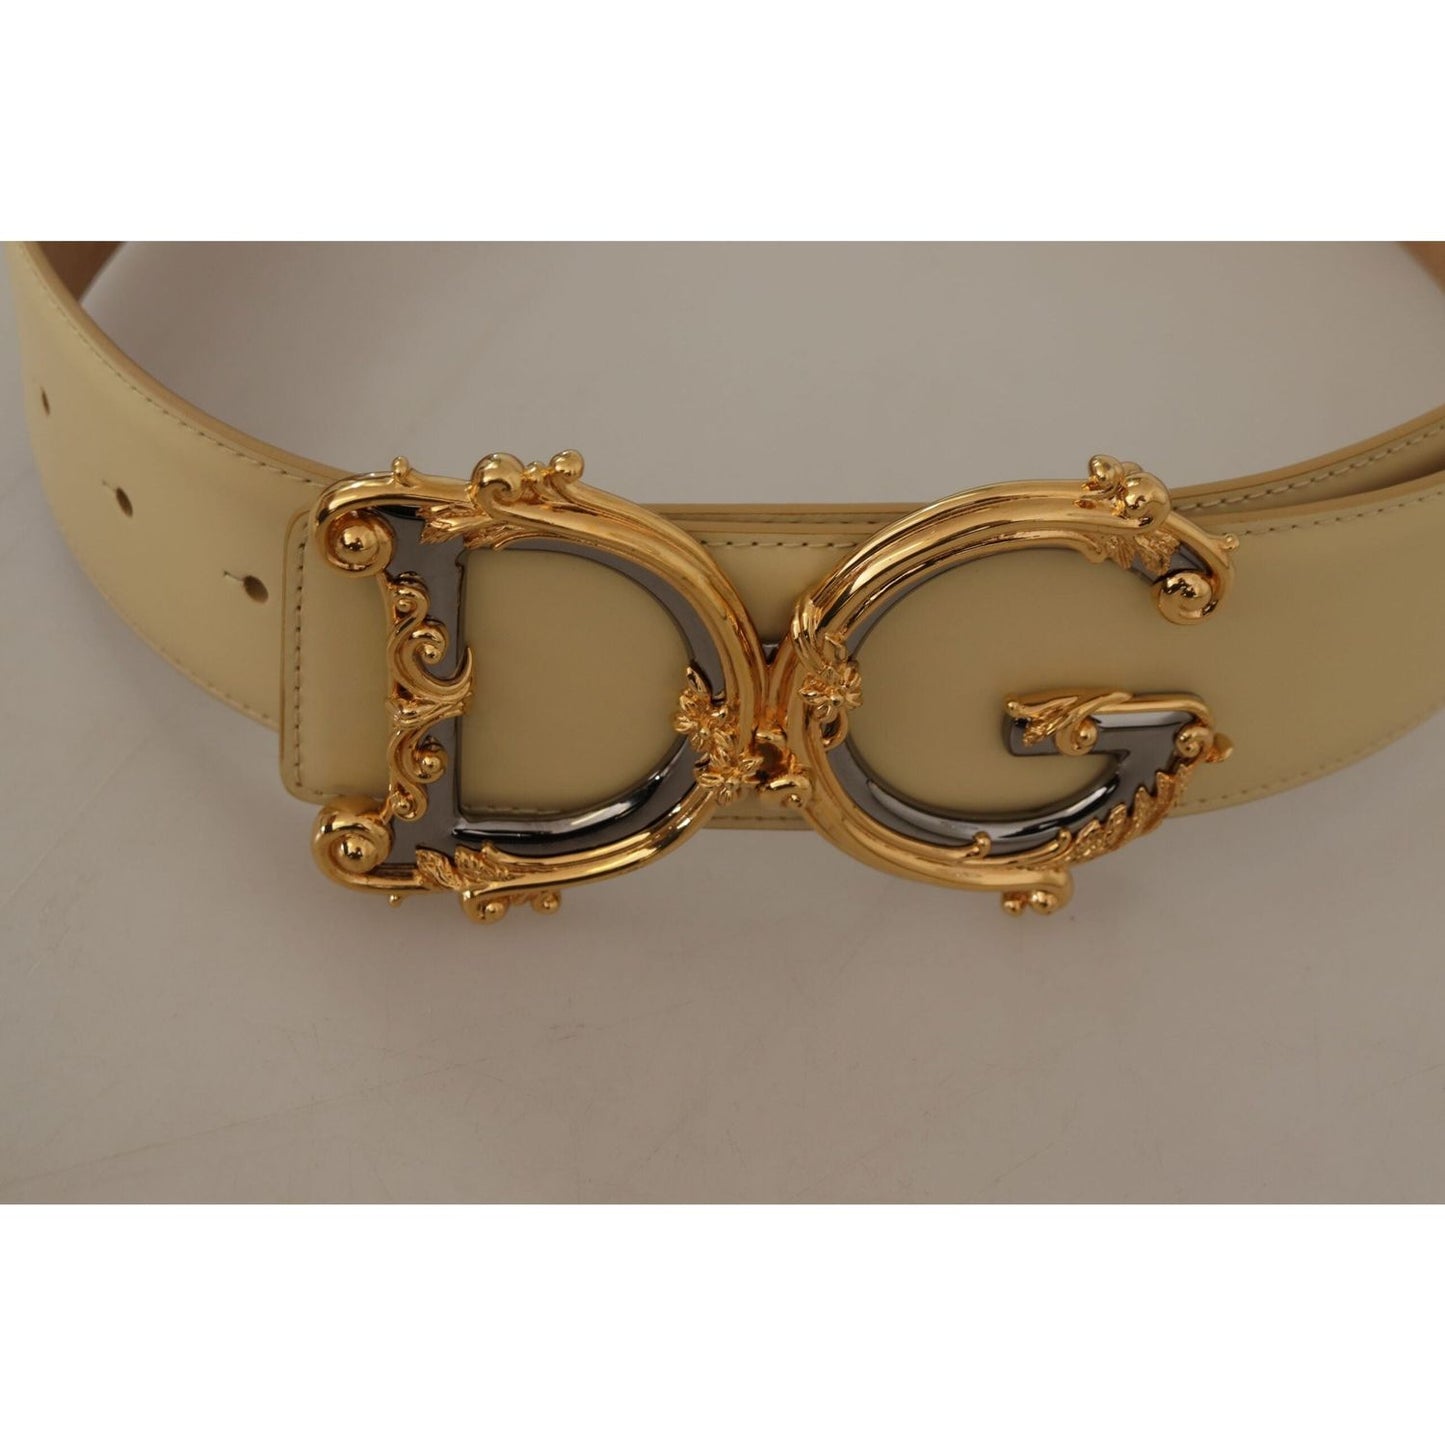 Dolce & Gabbana Beige Leather Engraved Buckle Belt beige-wide-waist-leather-dg-logo-baroque-buckle-belt IMG_9834-scaled-27bfde0d-1e0.jpg